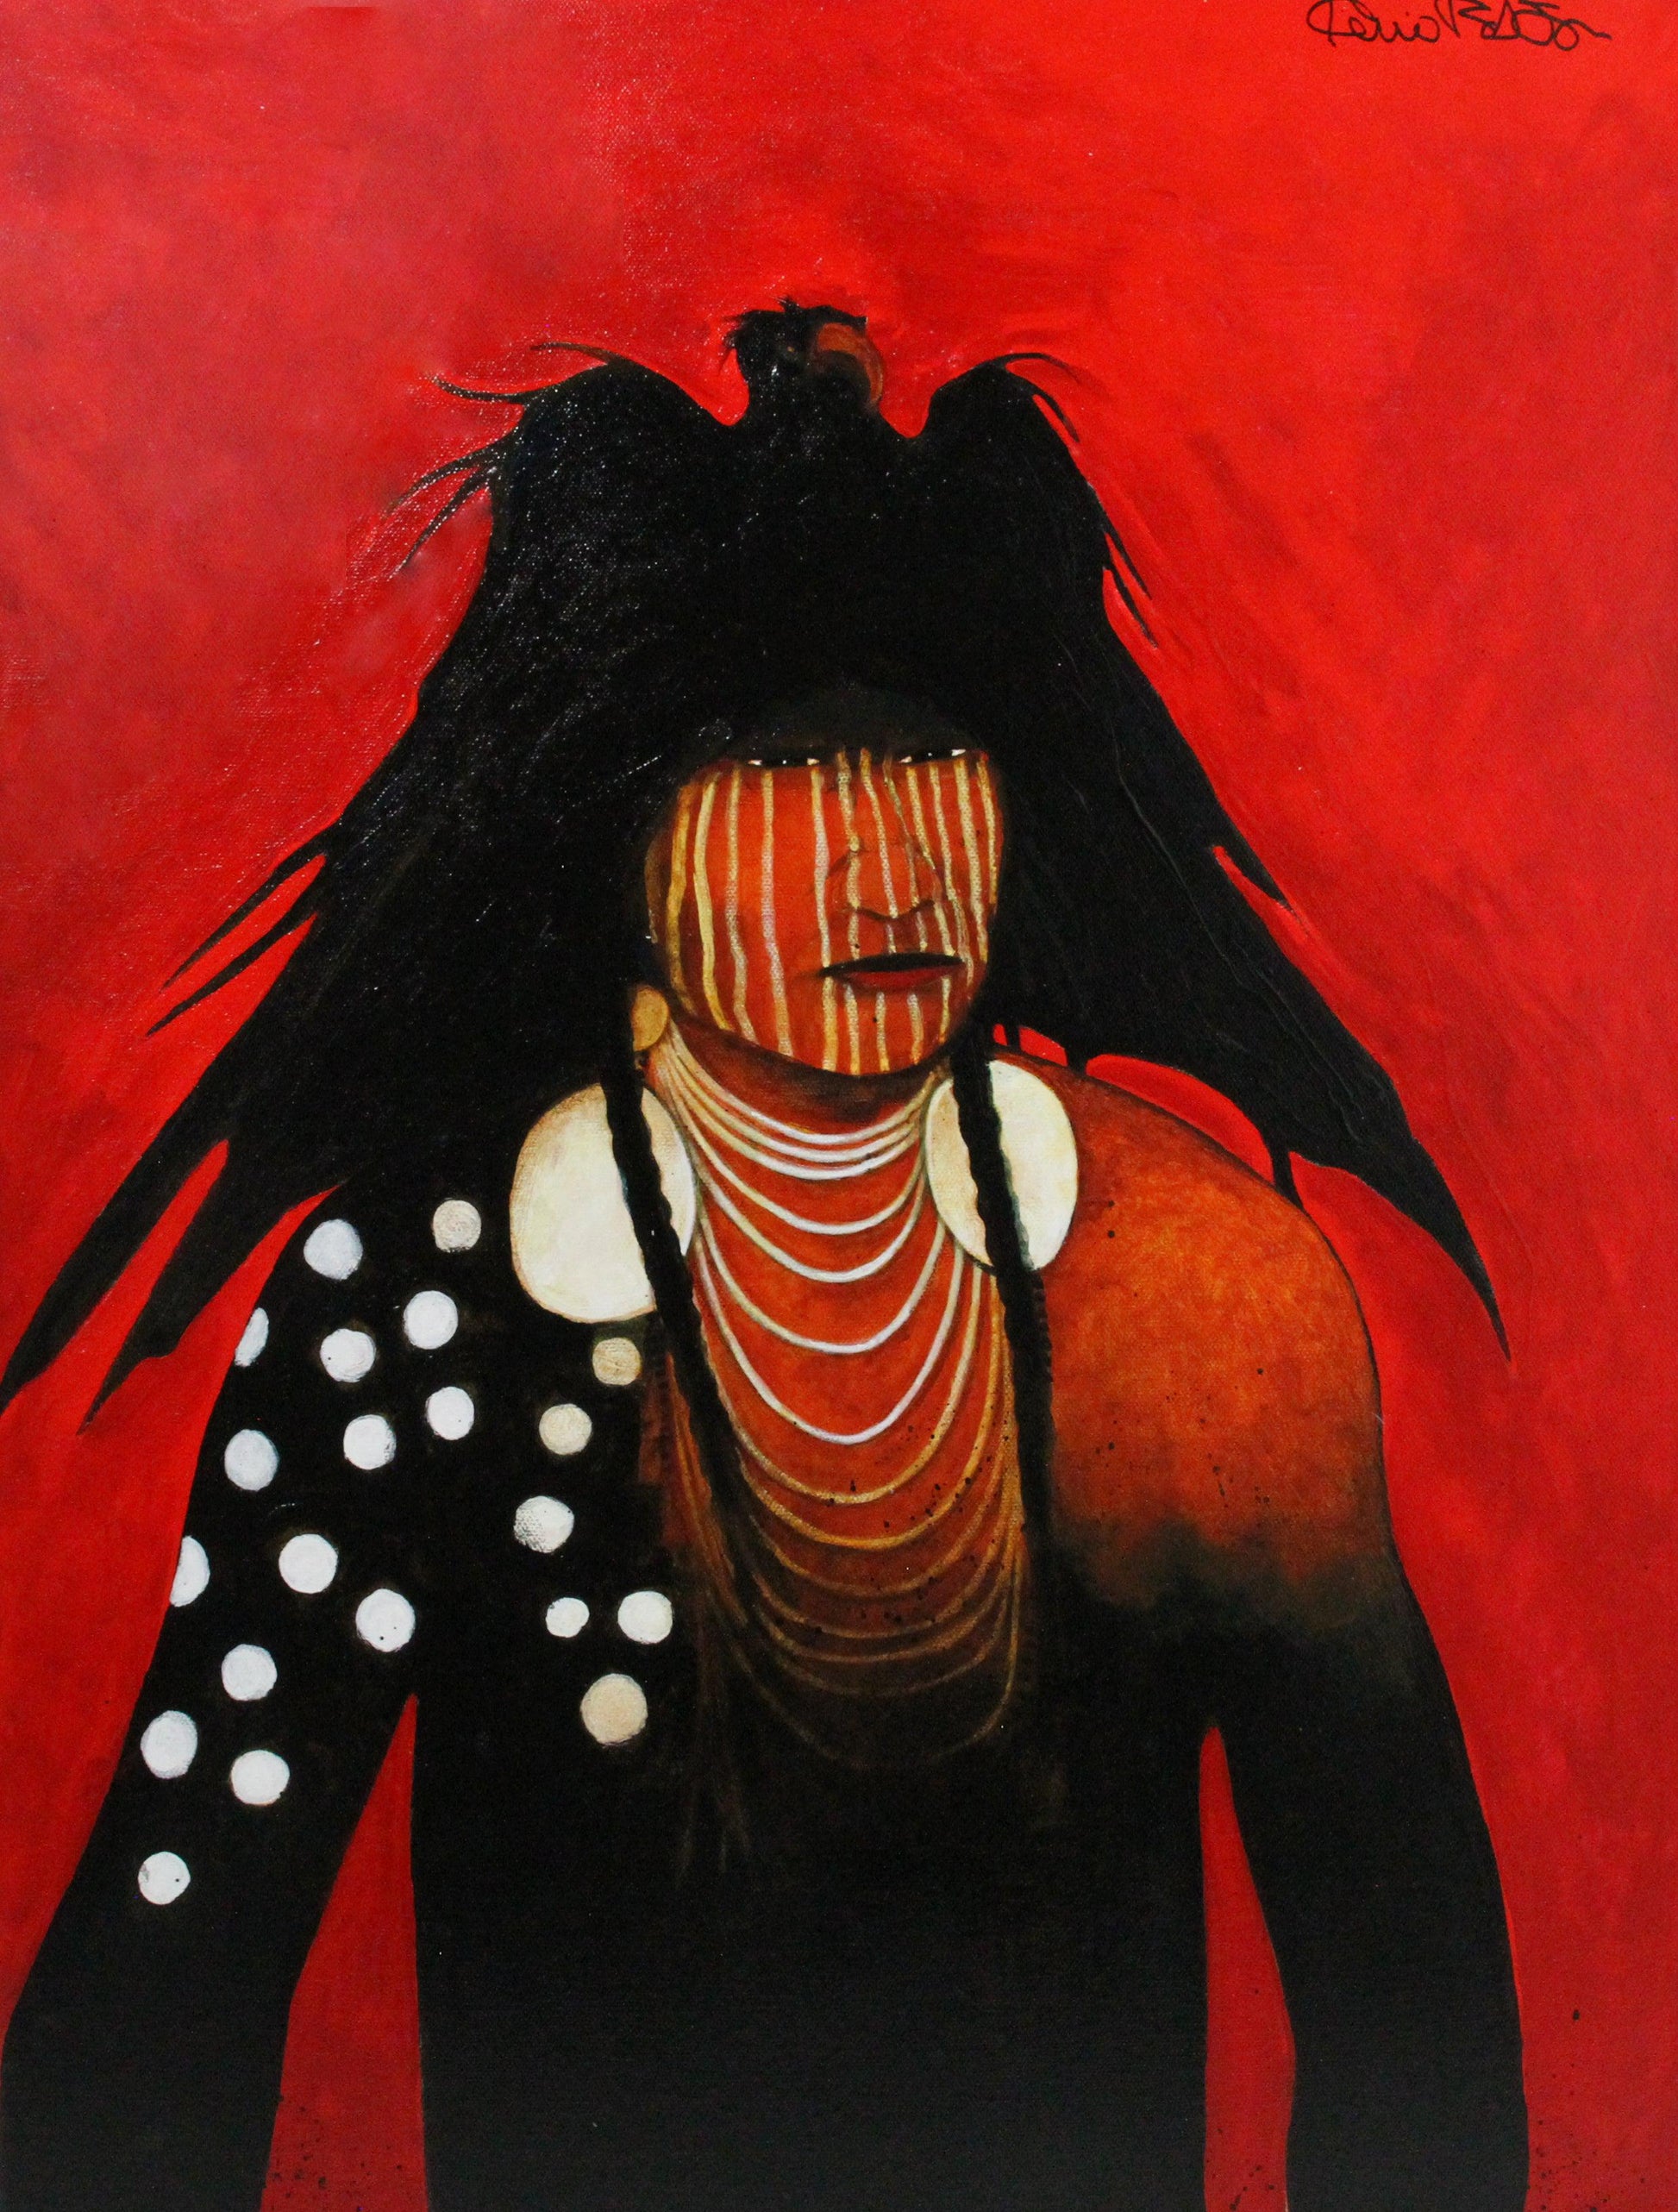 Black Bird-Painting-Kevin Red Star-Sorrel Sky Gallery